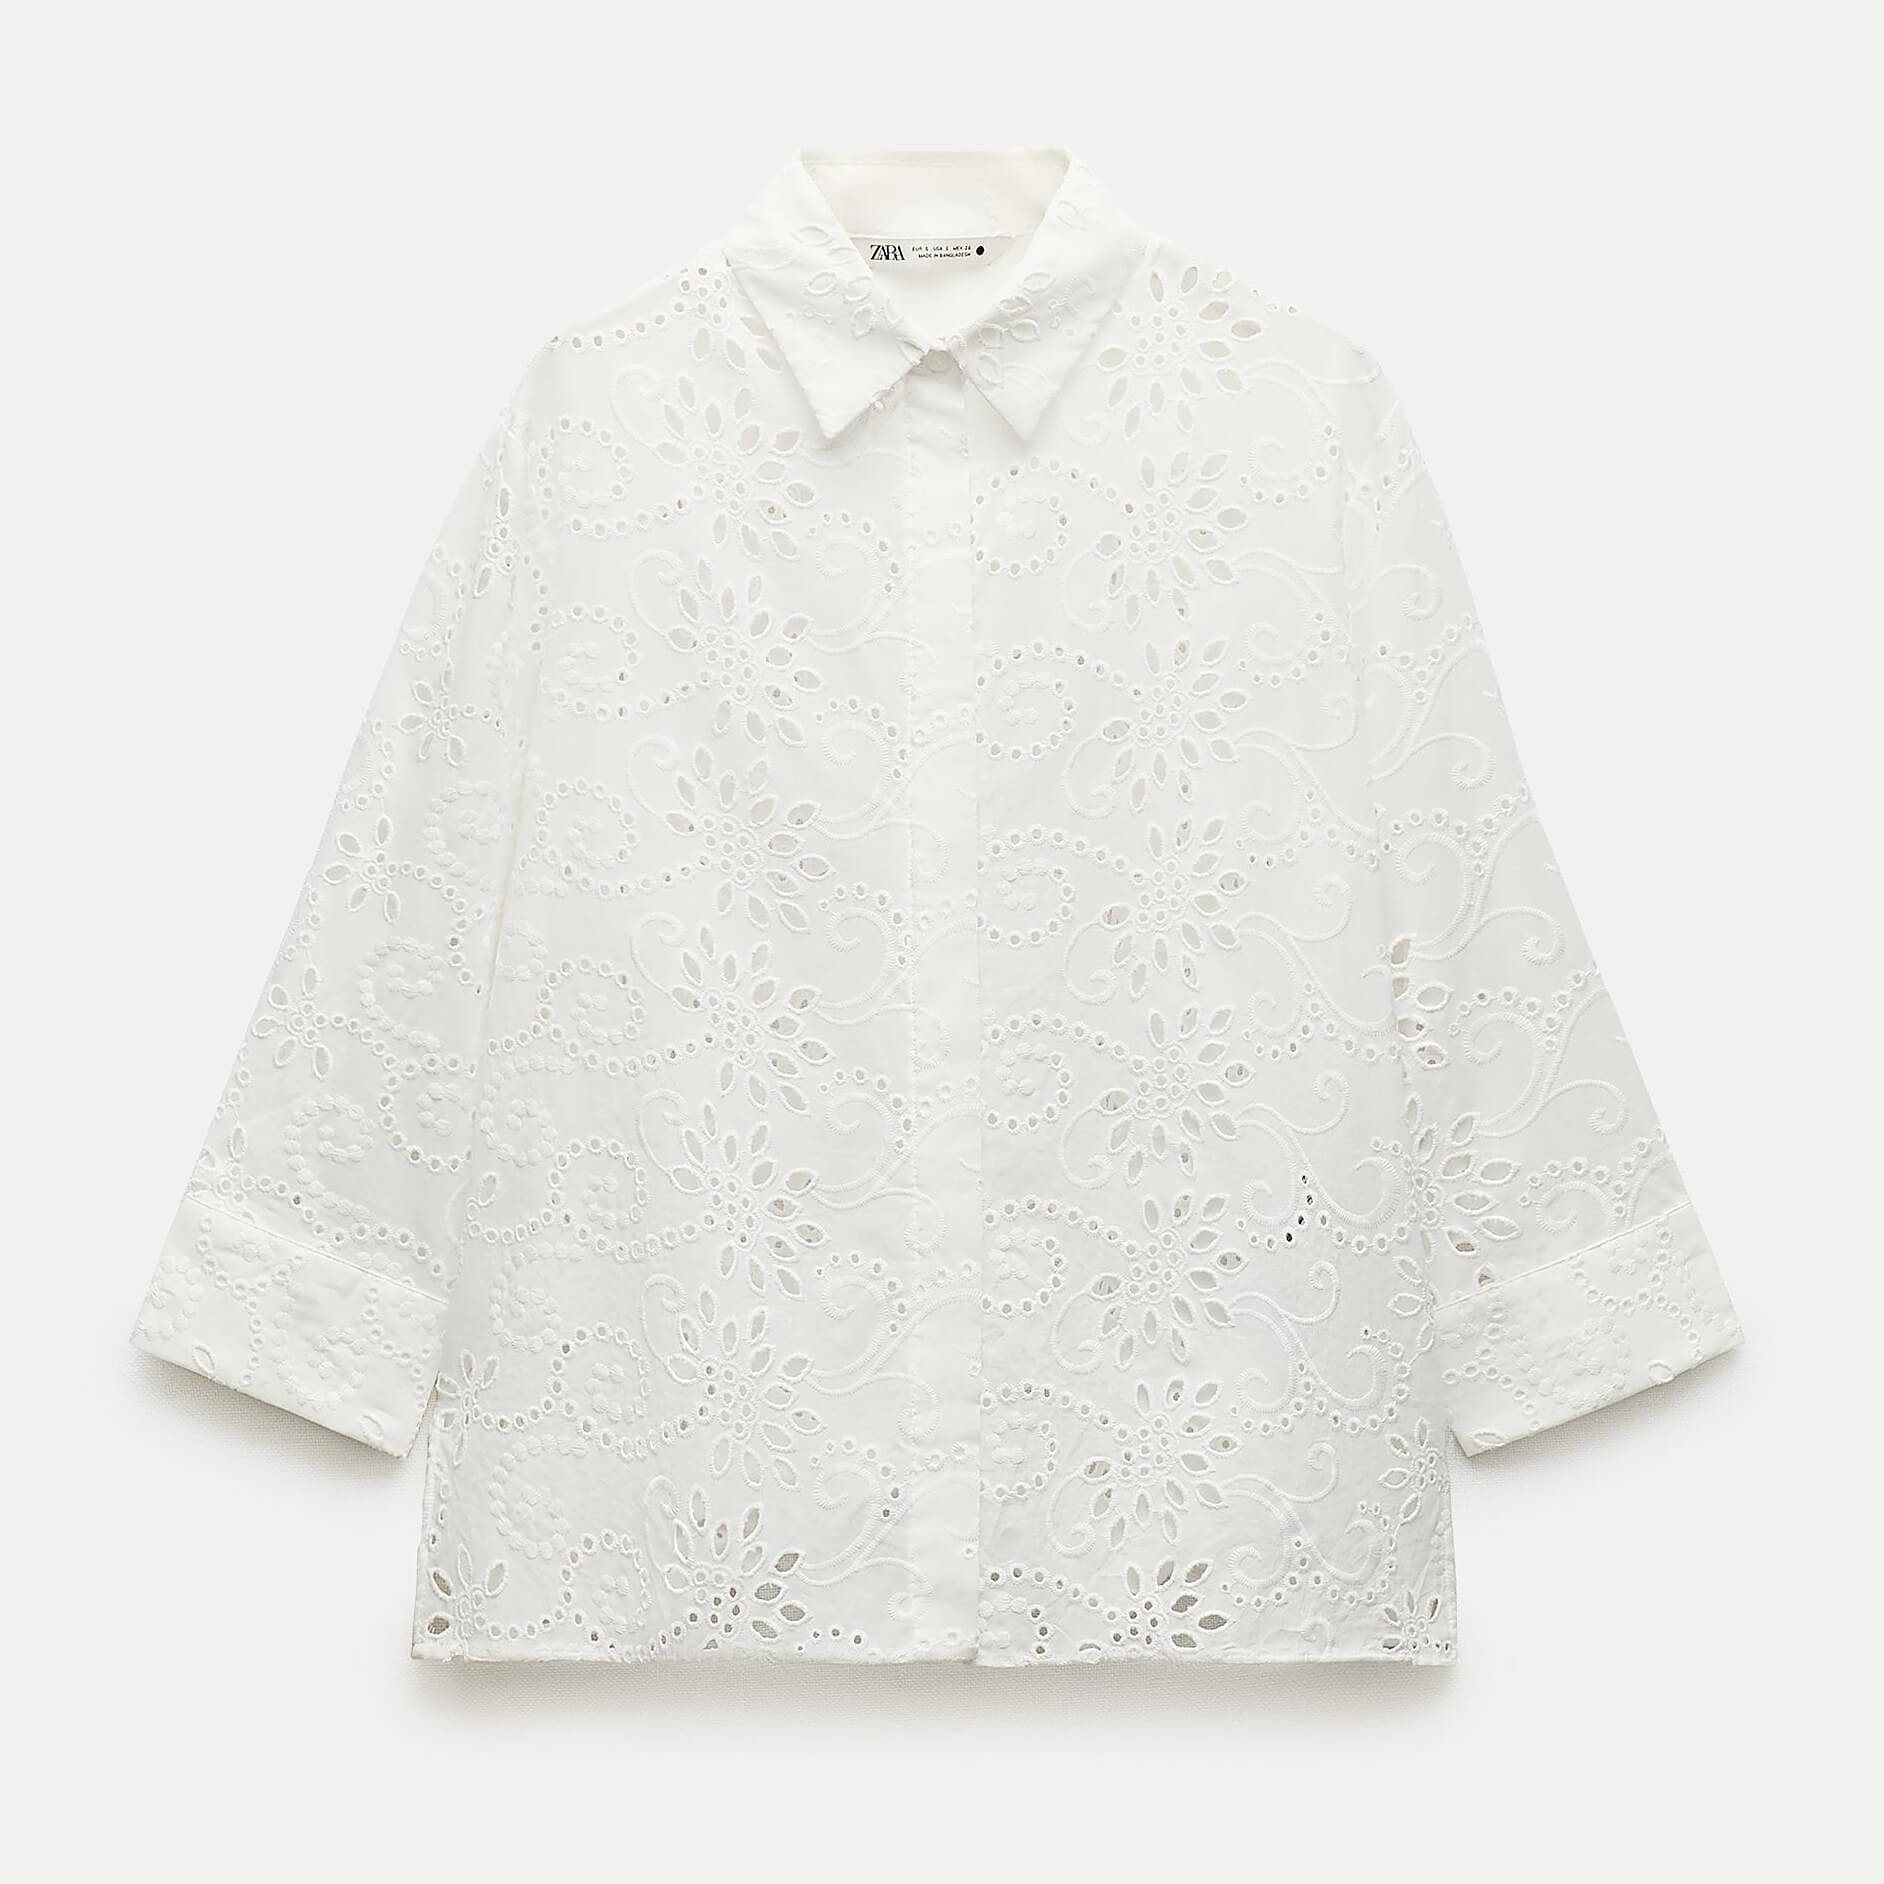 Рубашка Zara ZW Collection Cutwork Embroidery, белый рубашка zara zw collection 100% ruffled ramie белый